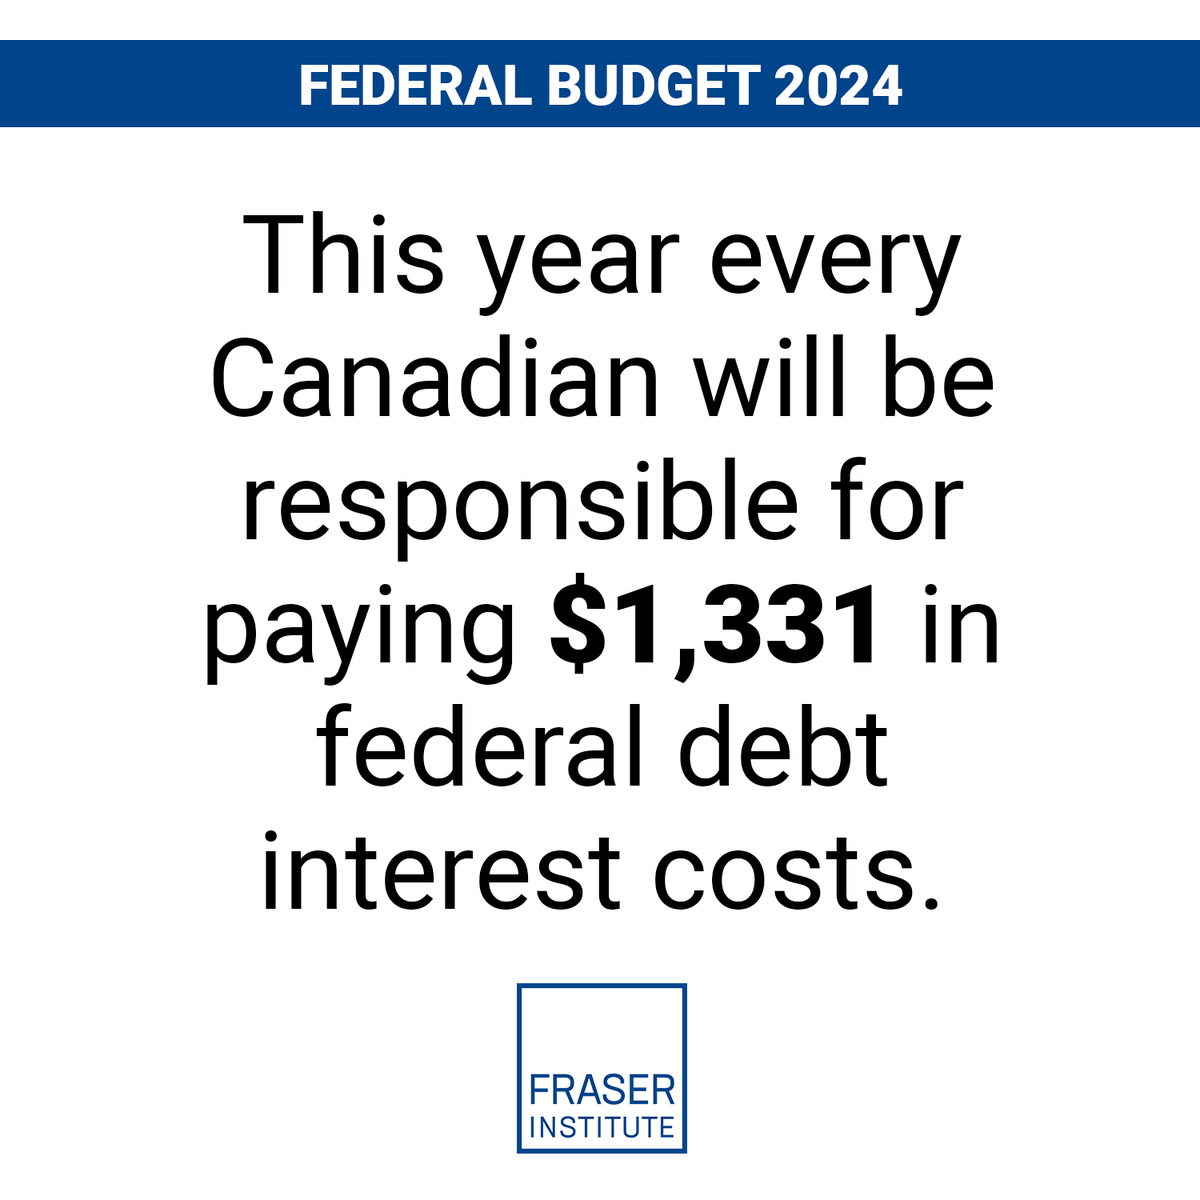 Deficit spending has consequences. #cdnpoli #Budget2024